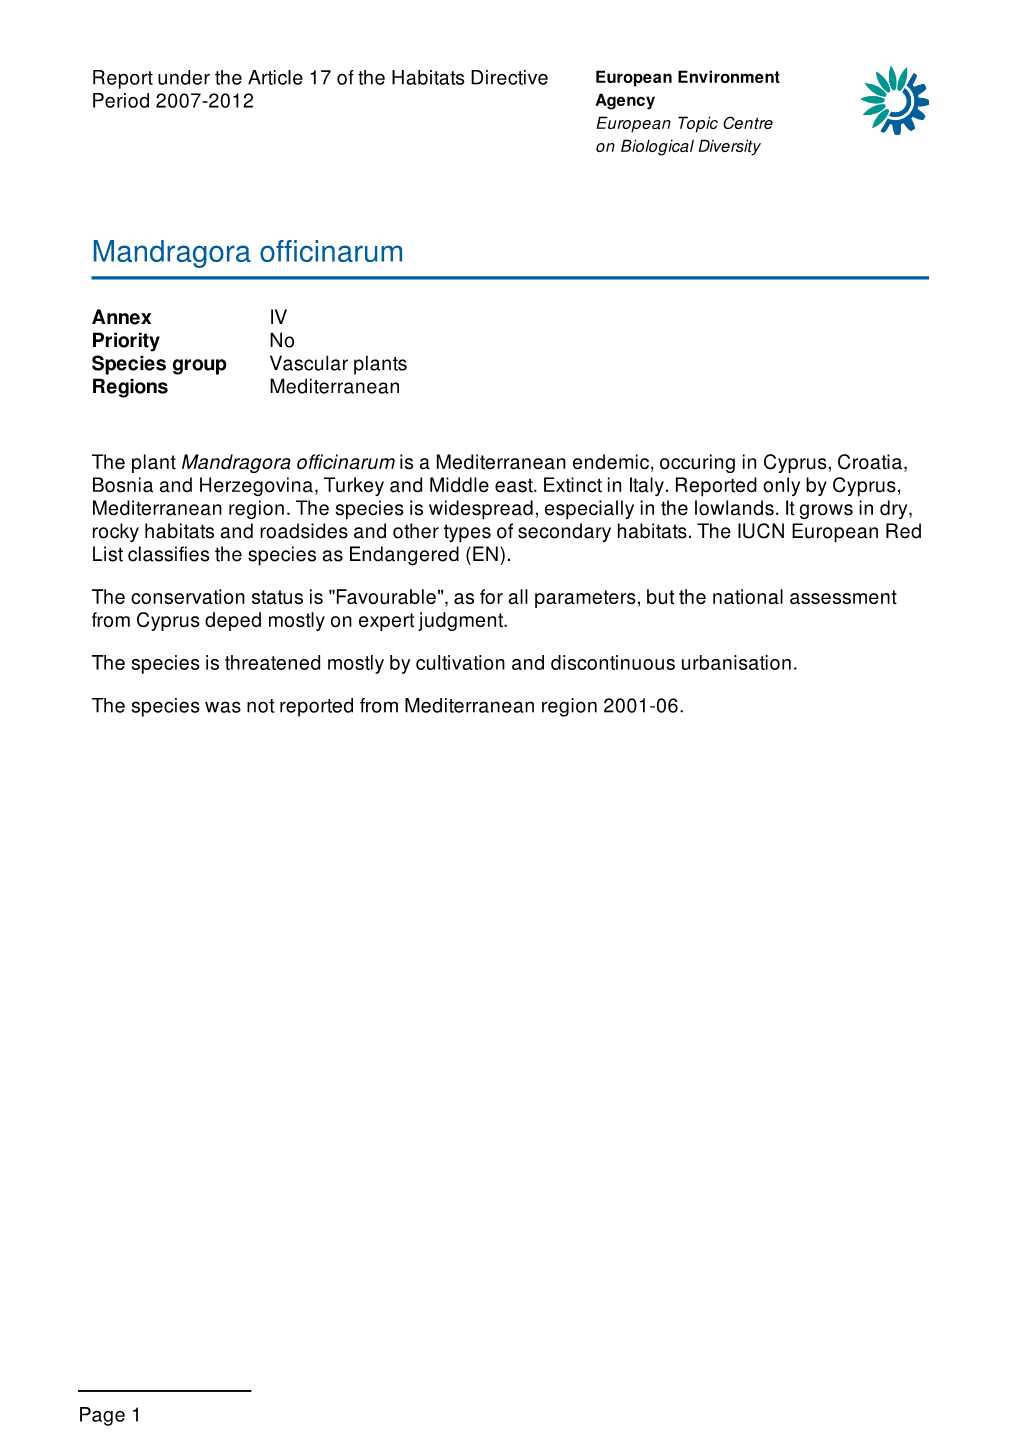 Mandragora Officinarum